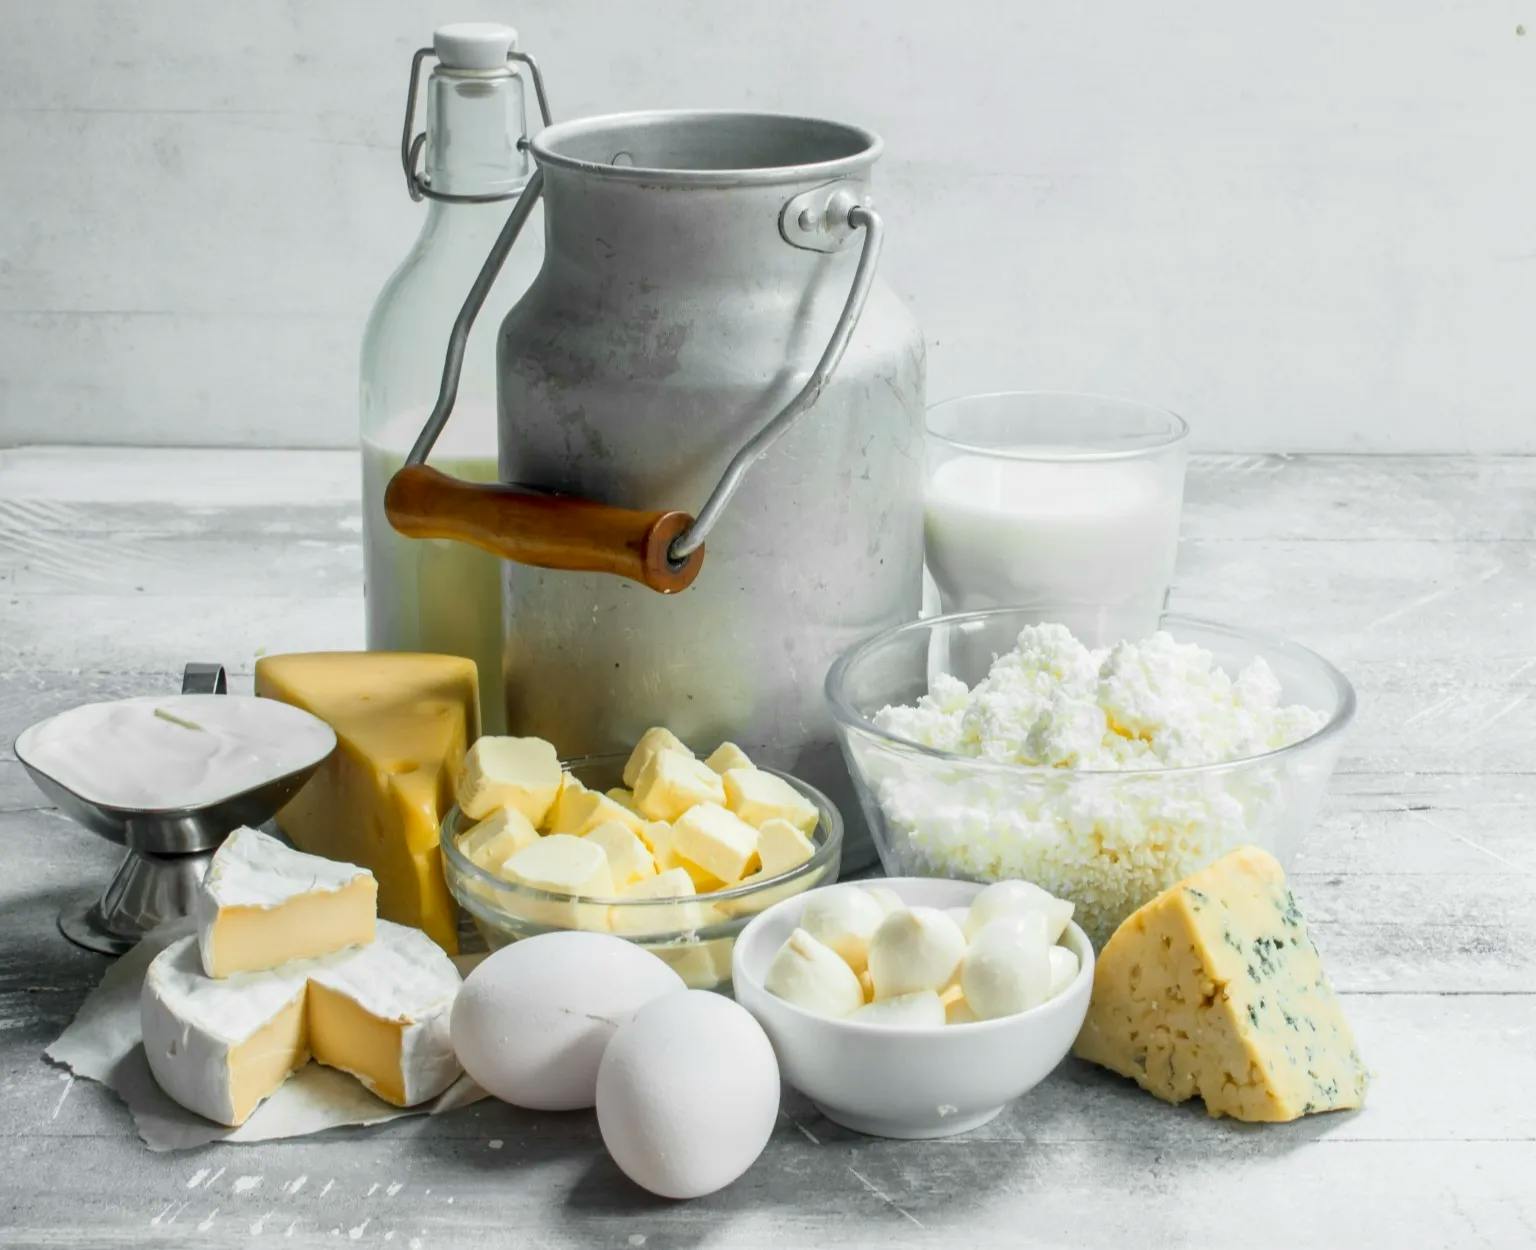 Jarras de leite, diversos tipos de queijo e ovos